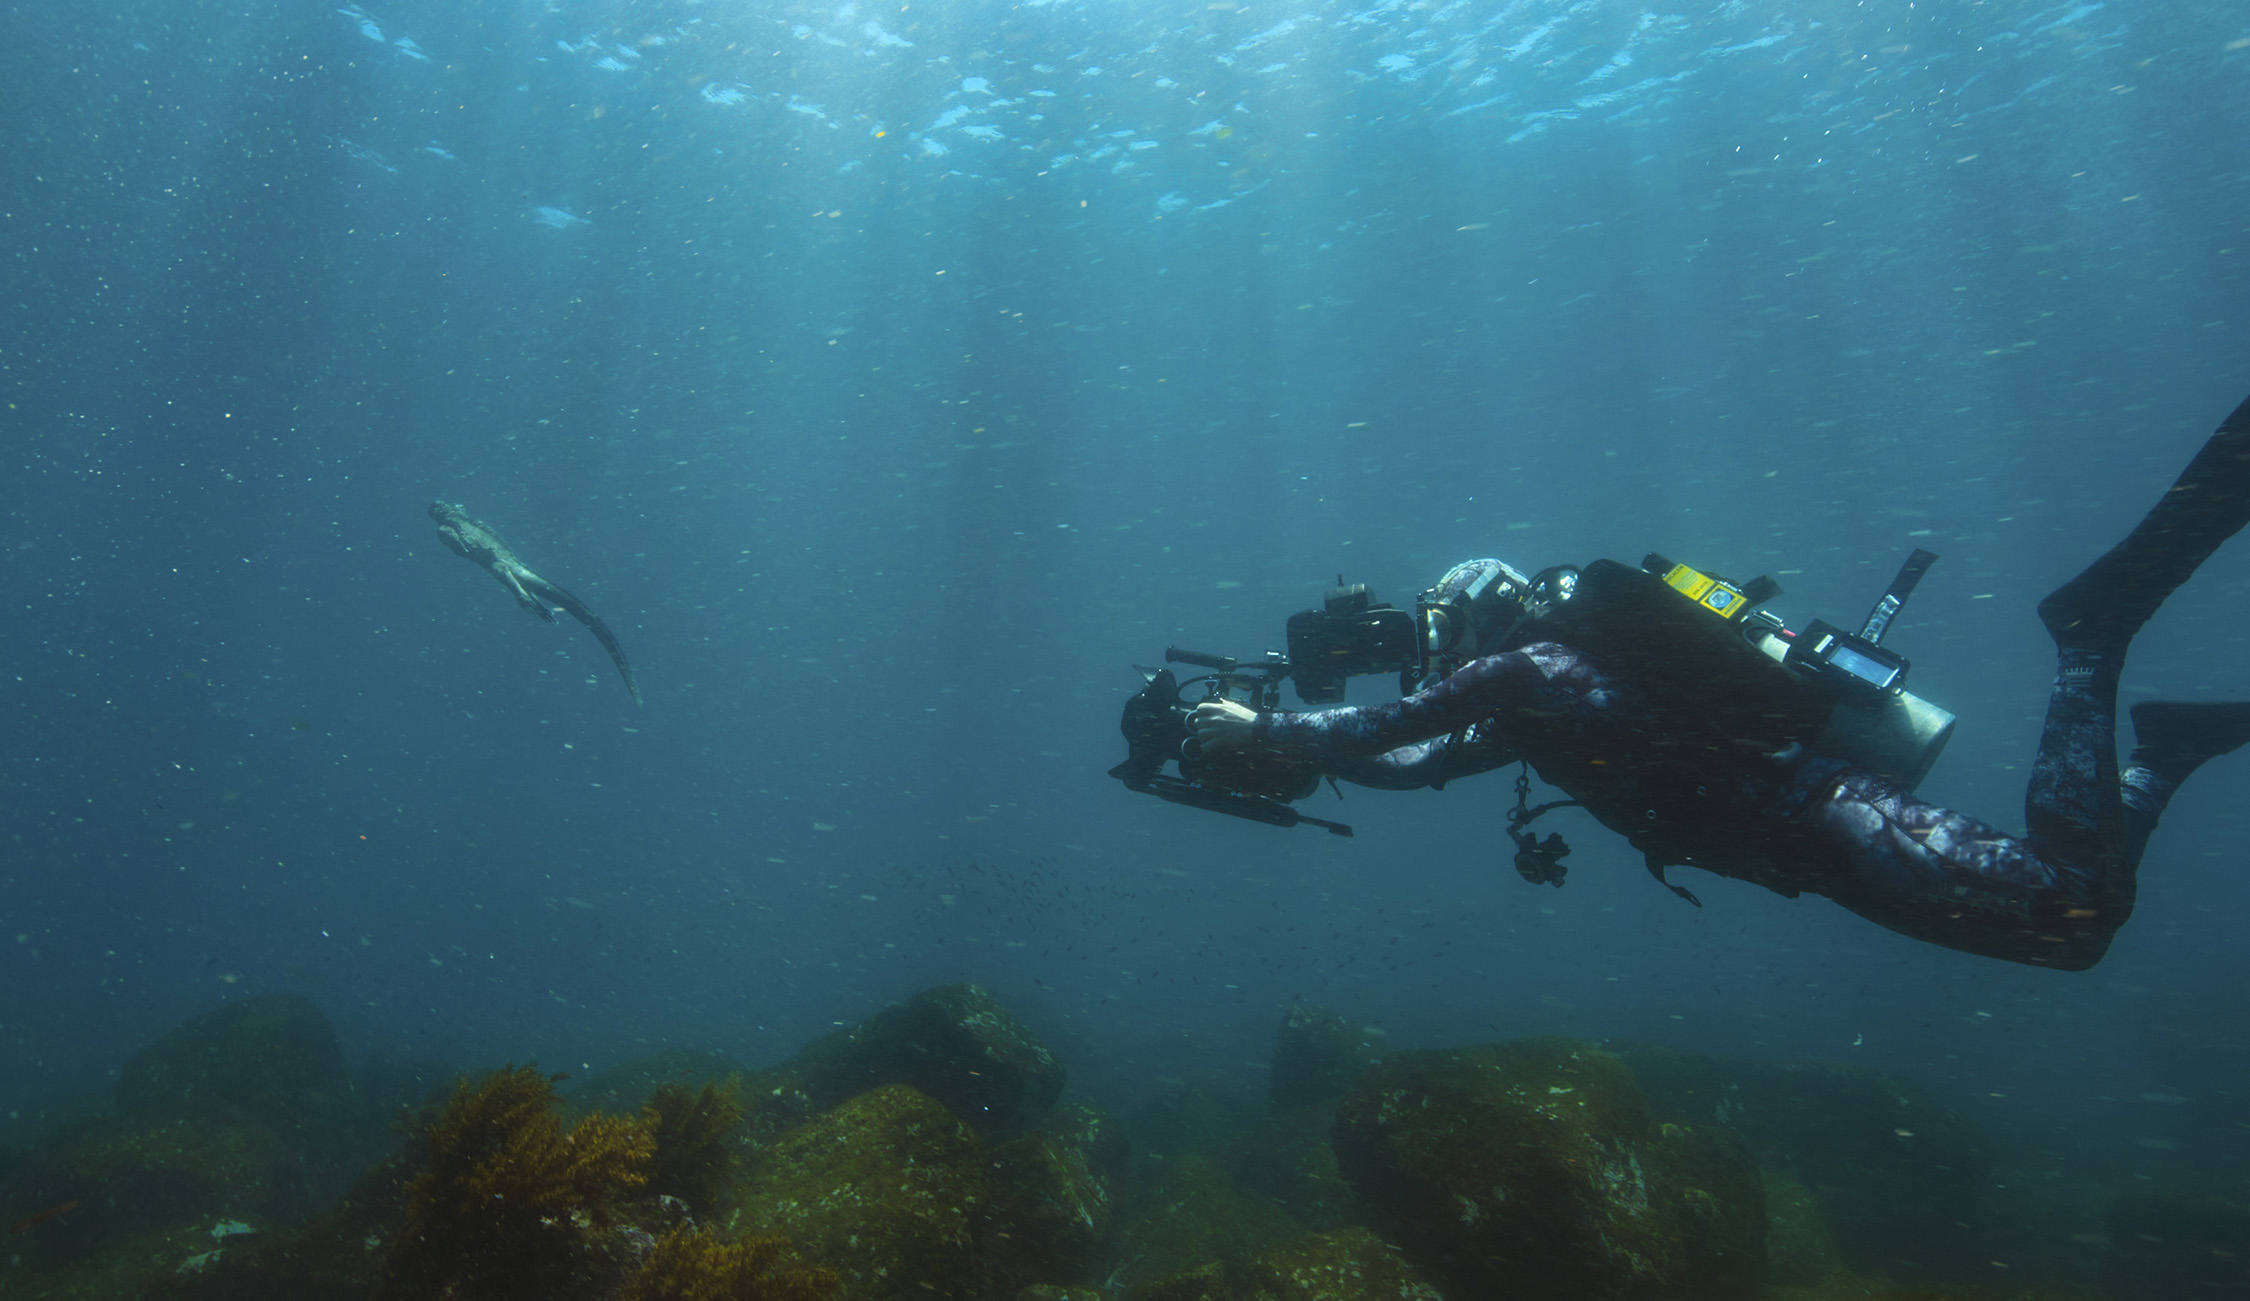 Underwater shot of Bertie Gregory following and filming marine iguana underwater.